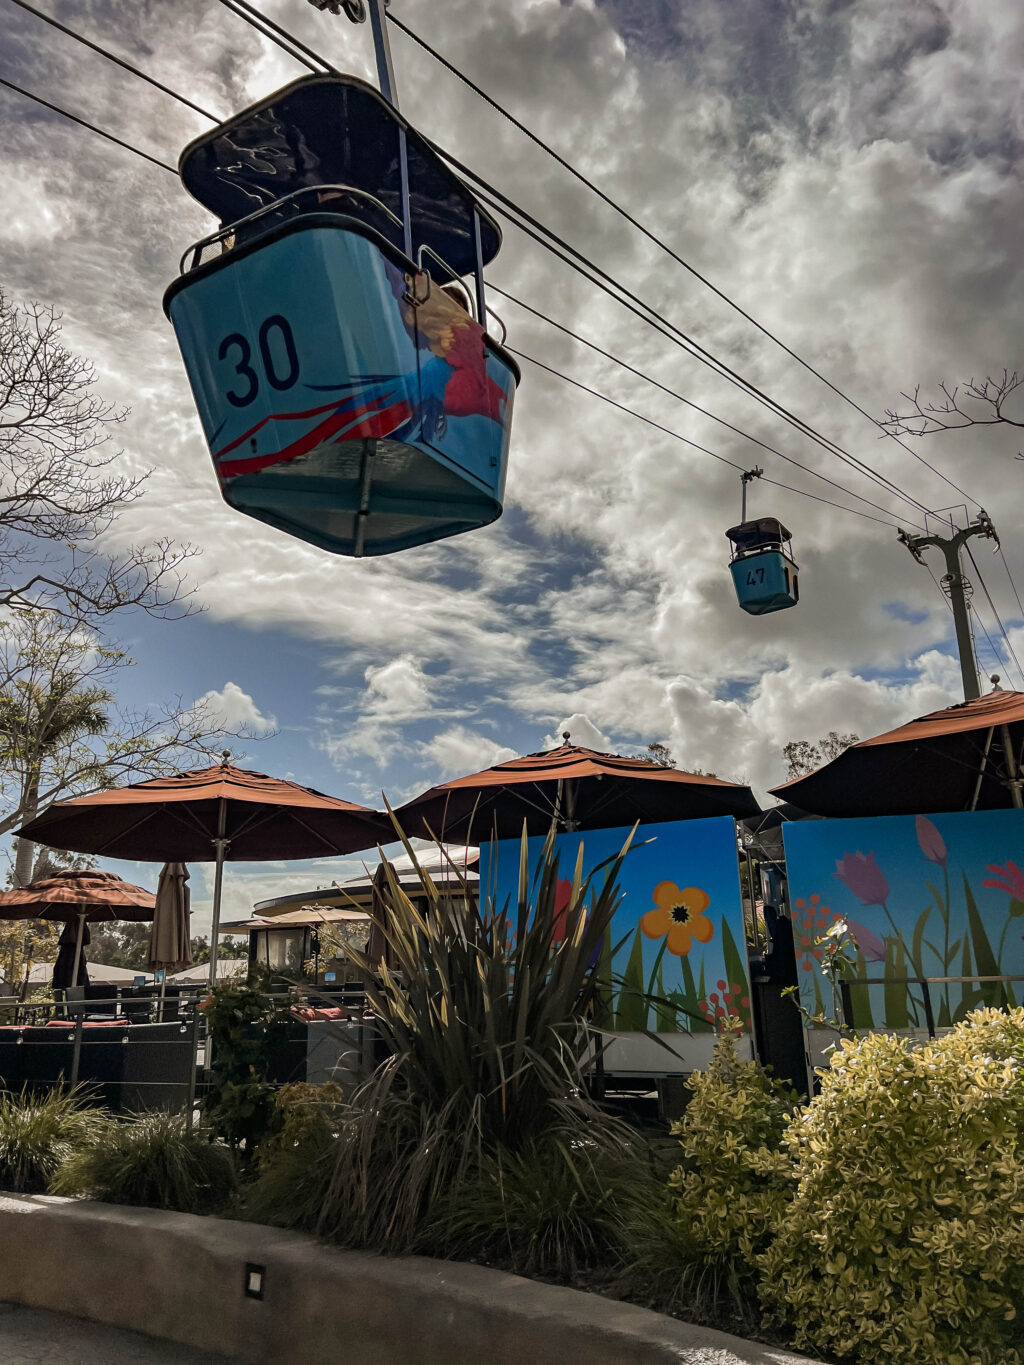 Visiting the San Diego Zoo? Don't miss the skyfari aerial tram!